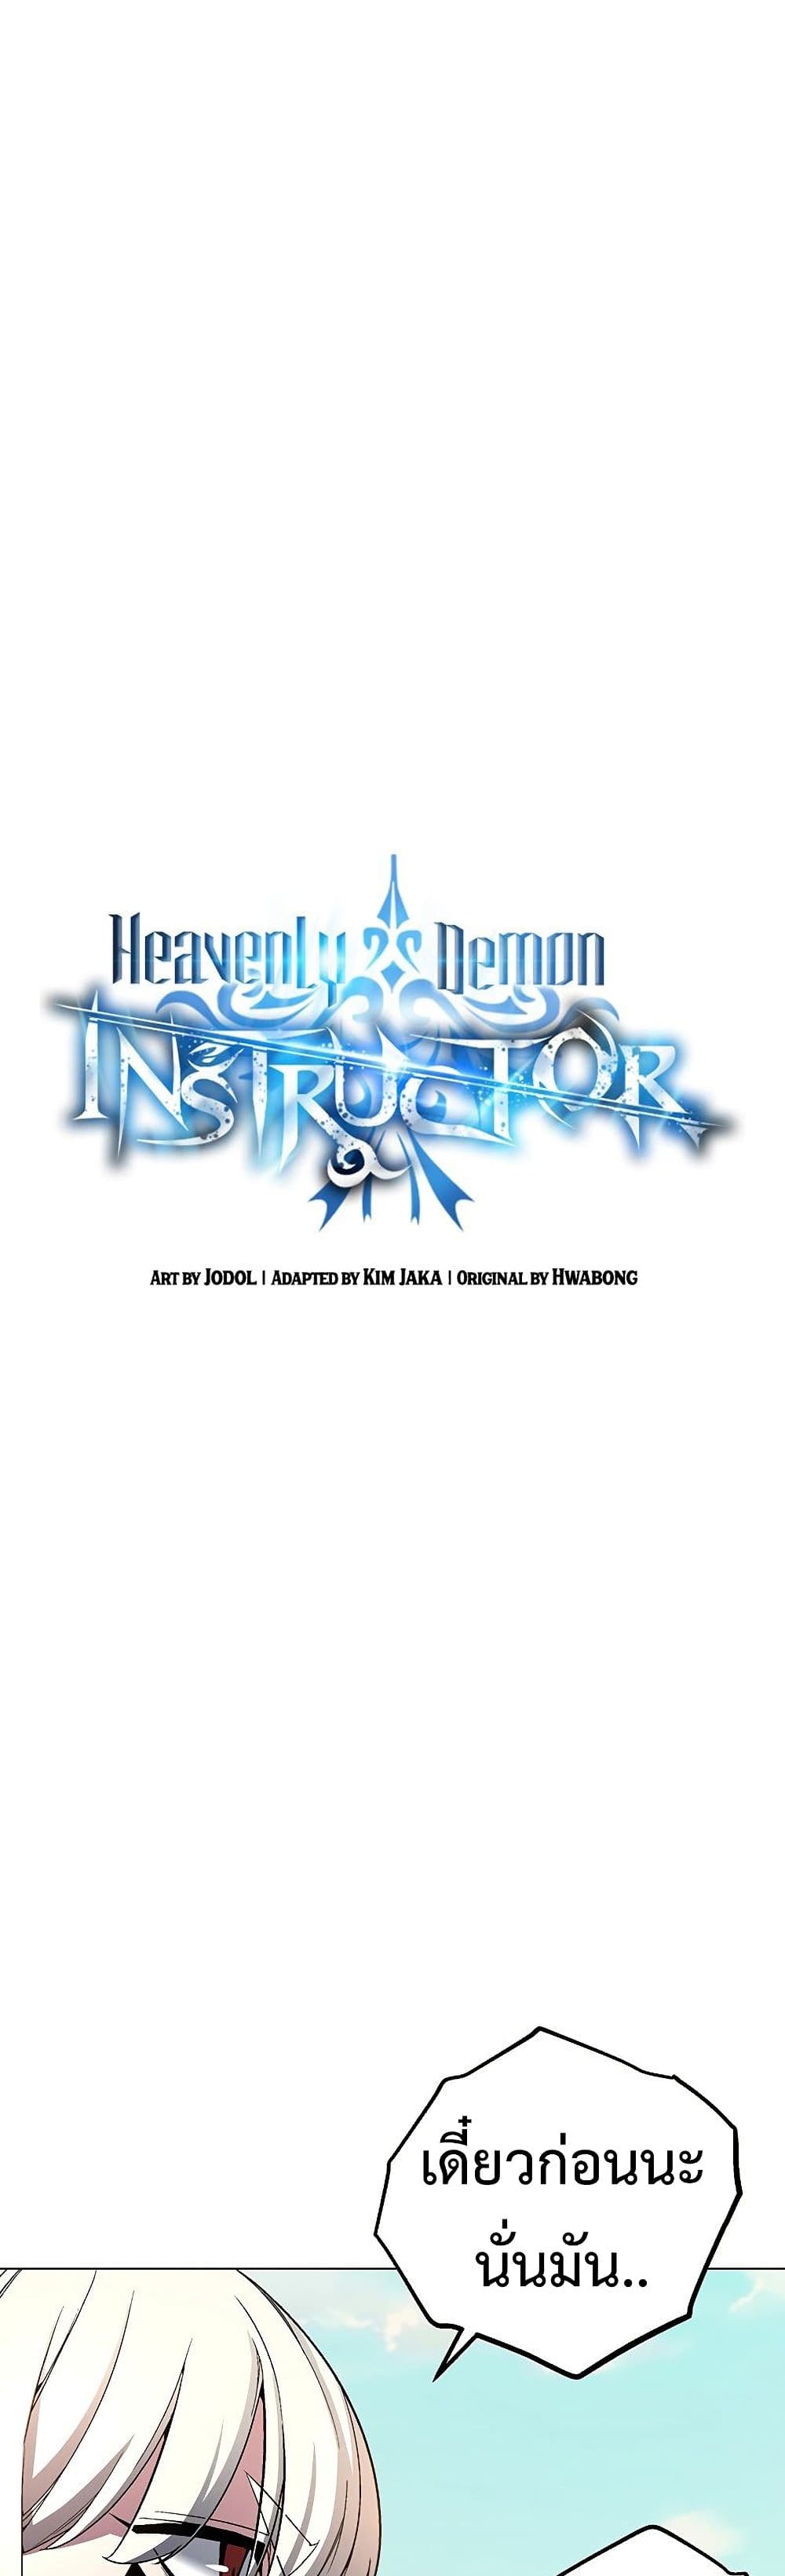 Heavenly Demon Instructor 59-59